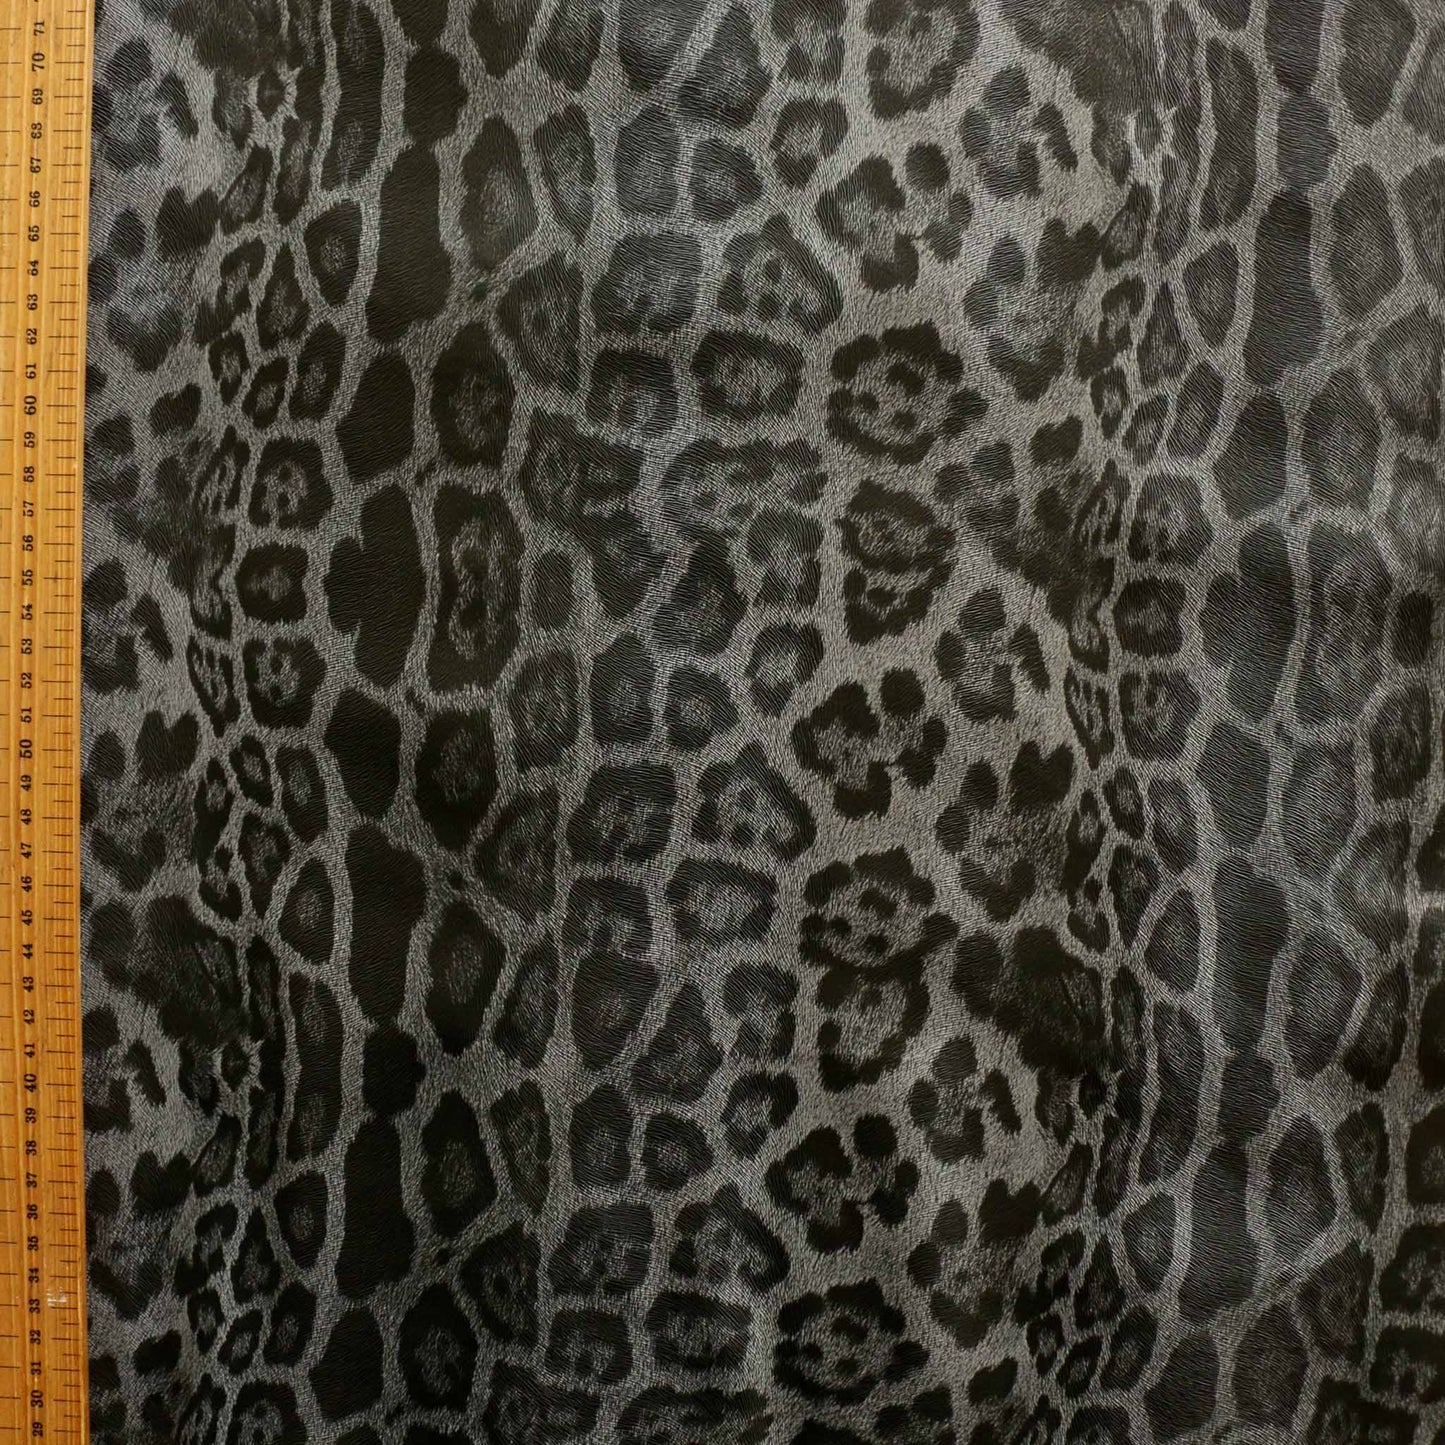 metre vinyl pvc leatherette with grey and black jaguar skin print